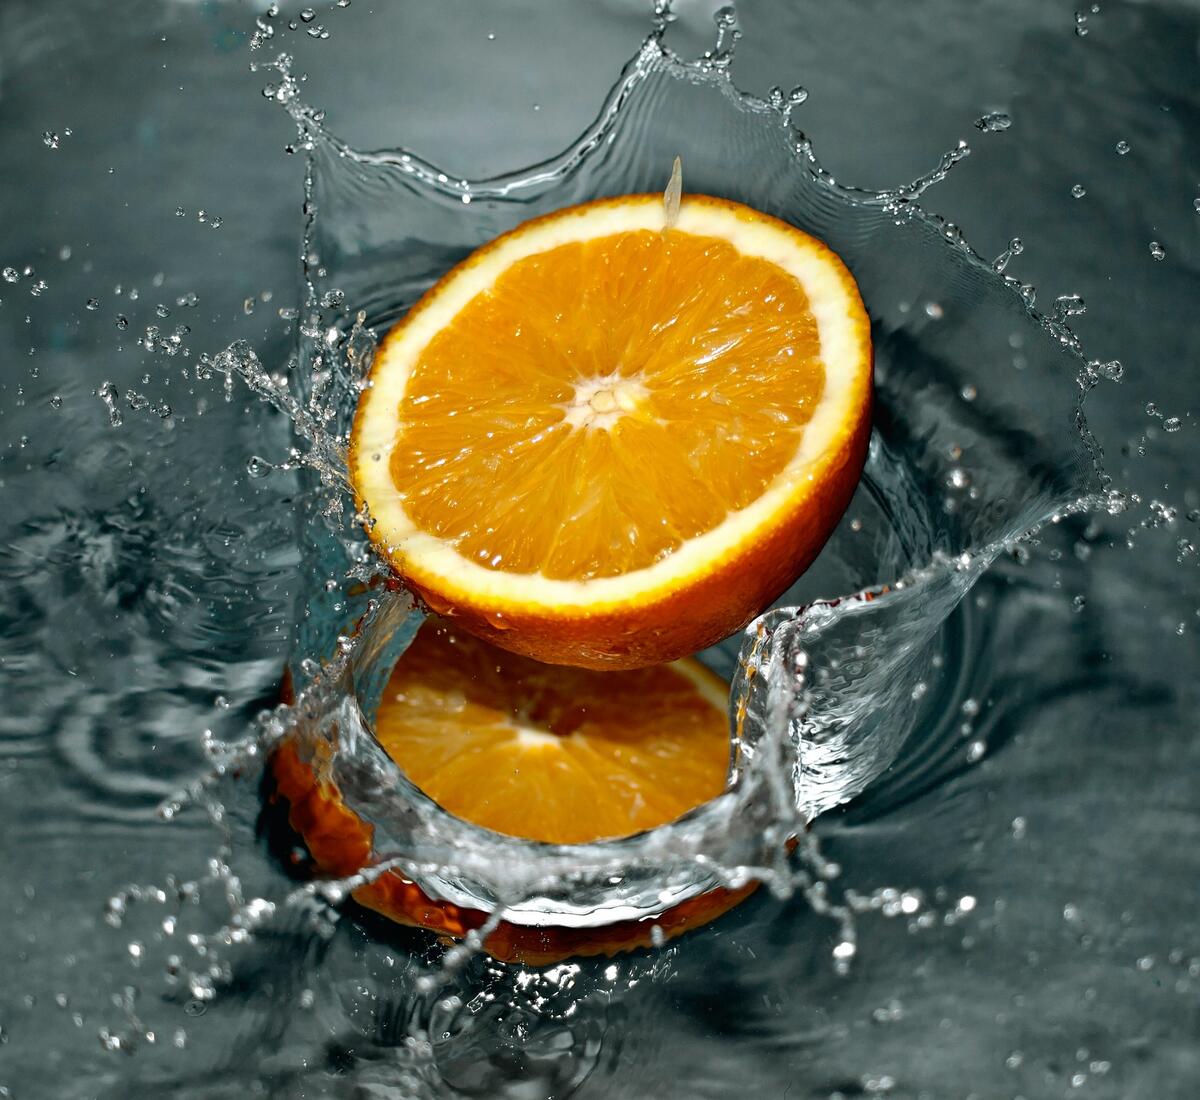 An orange in a slit fallen into the water